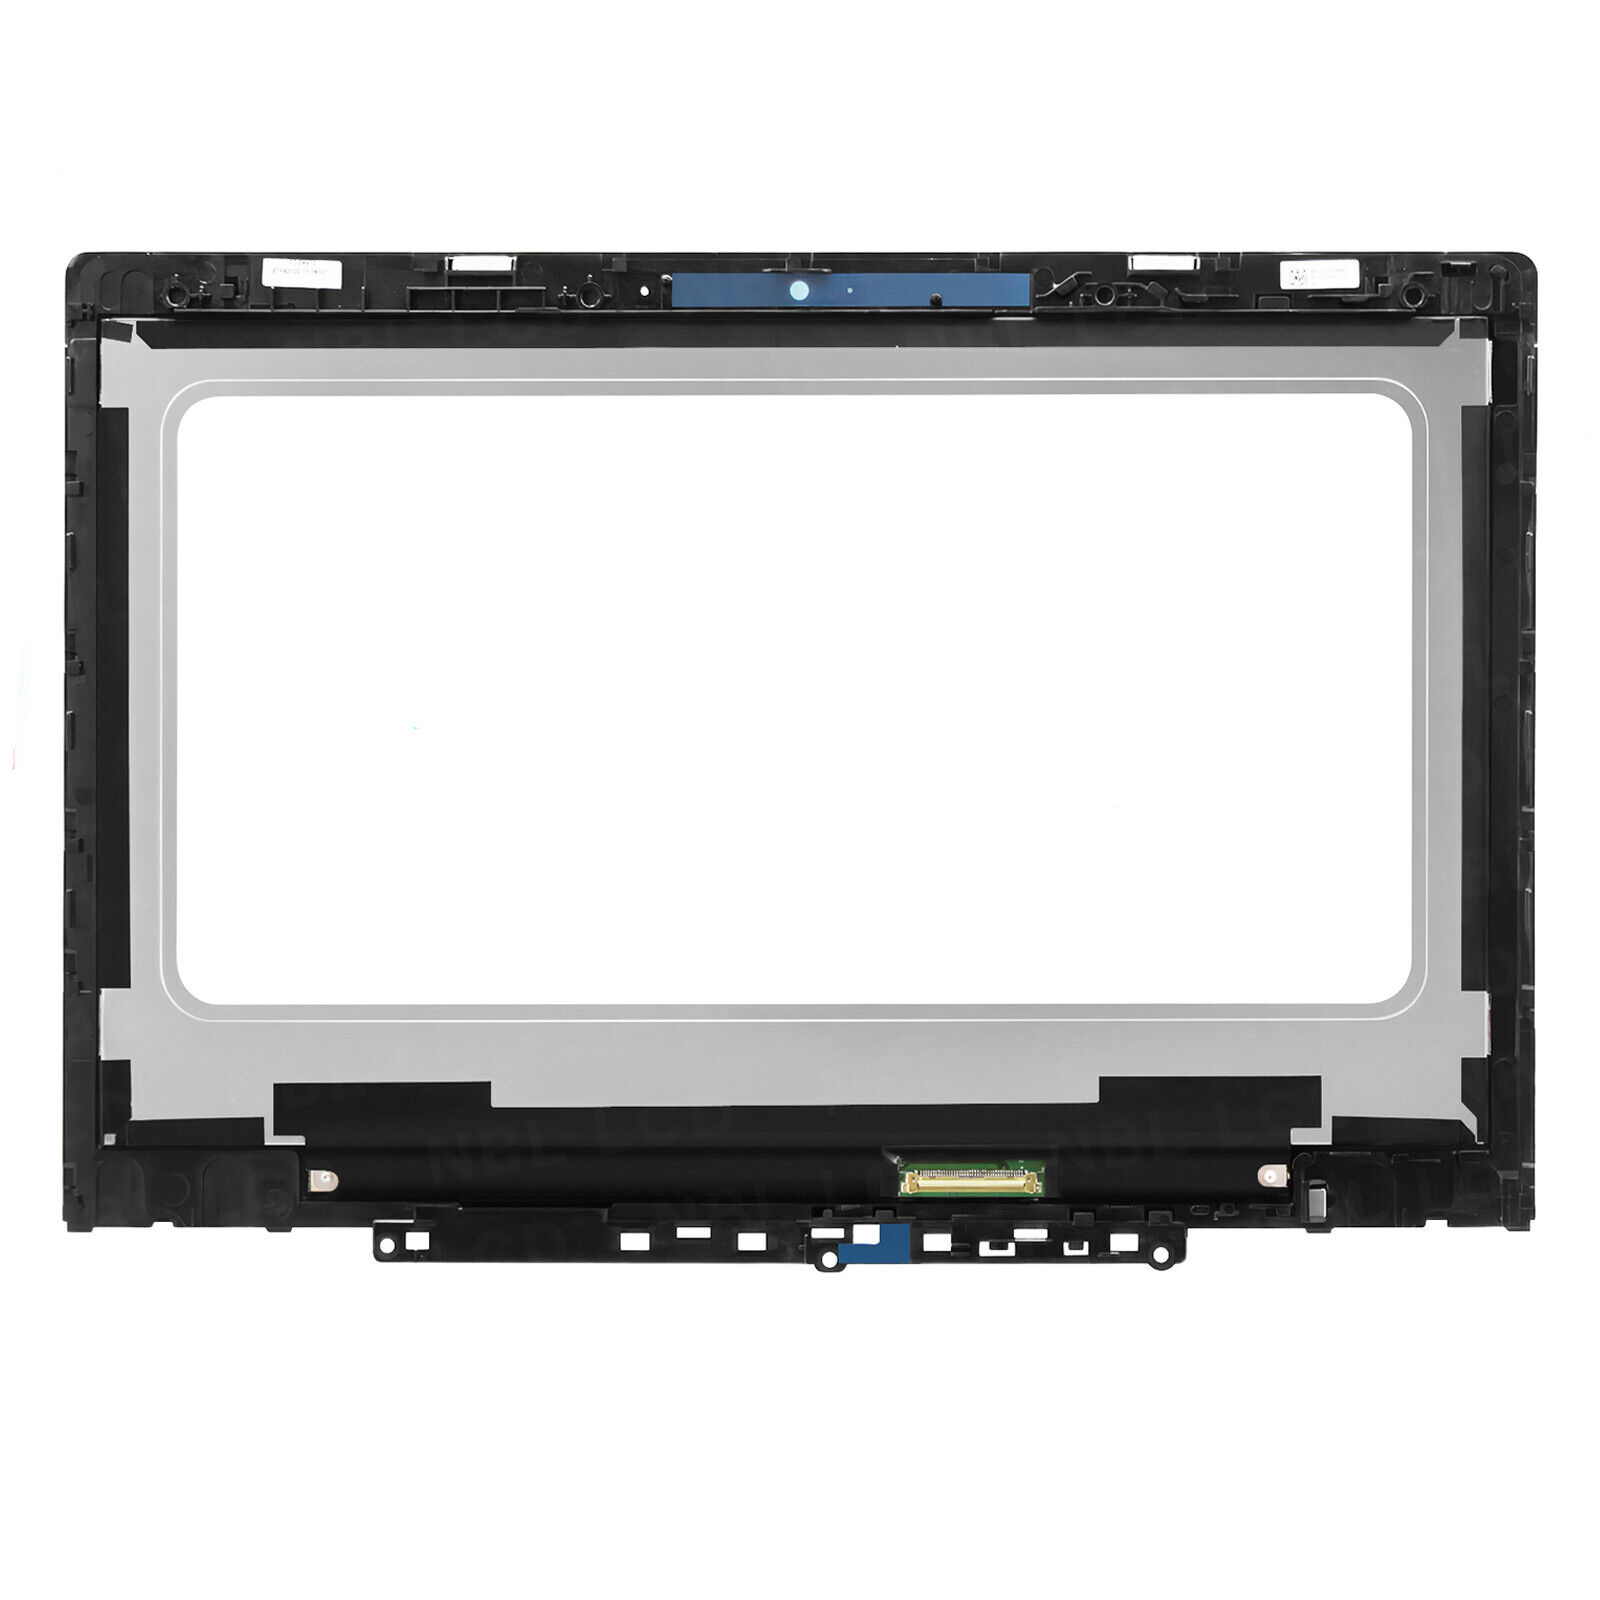 Lenovo 500e Chromebook 2nd Gen-এর জন্য LCD টাচ স্ক্রিন প্রতিস্থাপন - 1